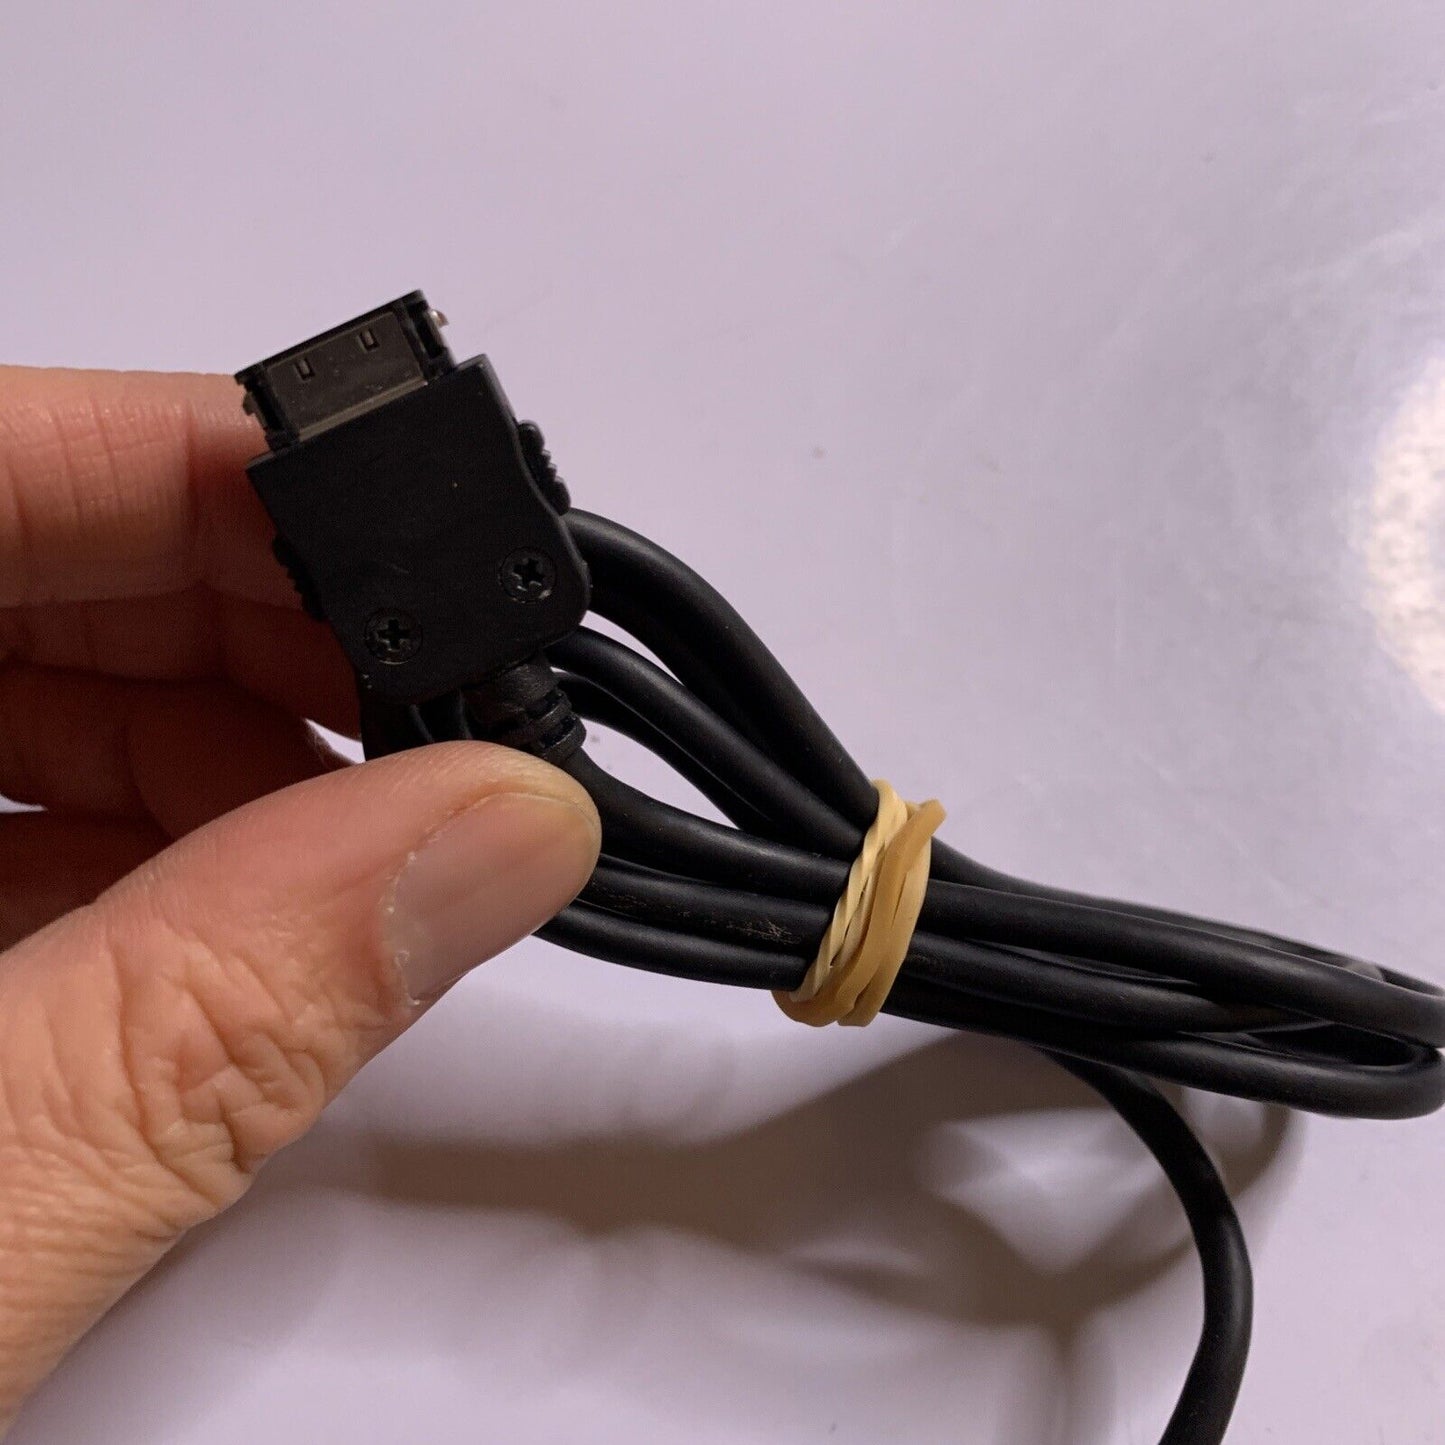 Sony Digital Media Port Adapter TDM-iP10 30-pin Apple Connector for Sony Hi-Fi